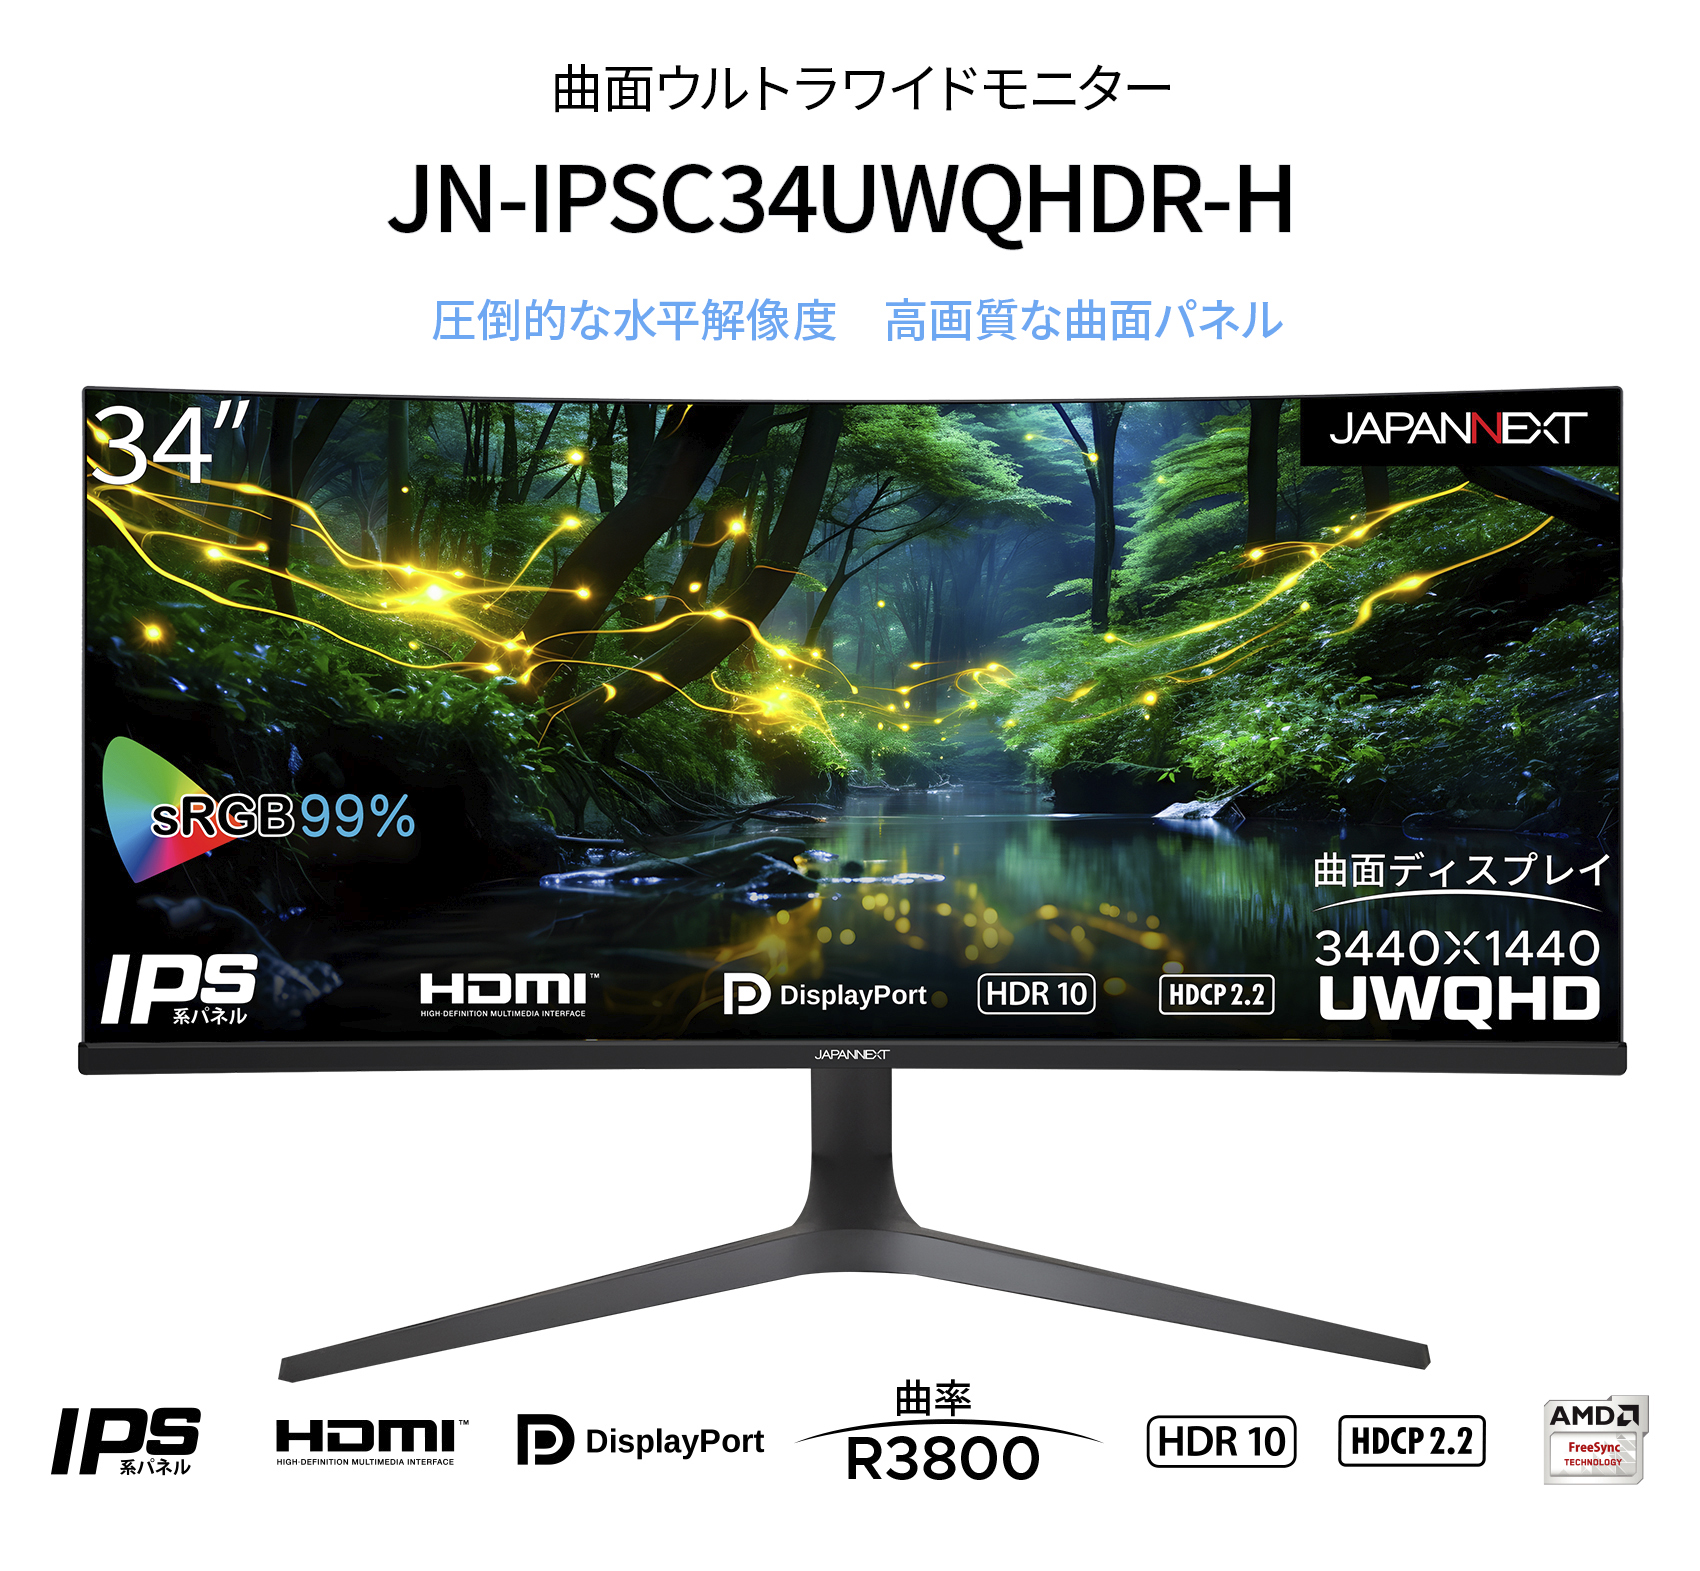 JAPANNEXT 34インチ曲面  IPSパネル UWQHD(3440 x 1440)解像度 ウルトラワイドモニター  JN-IPSC34UWQHDR-H  HDMI DP sRGB99 昇降式スタンド ジャパンネクスト